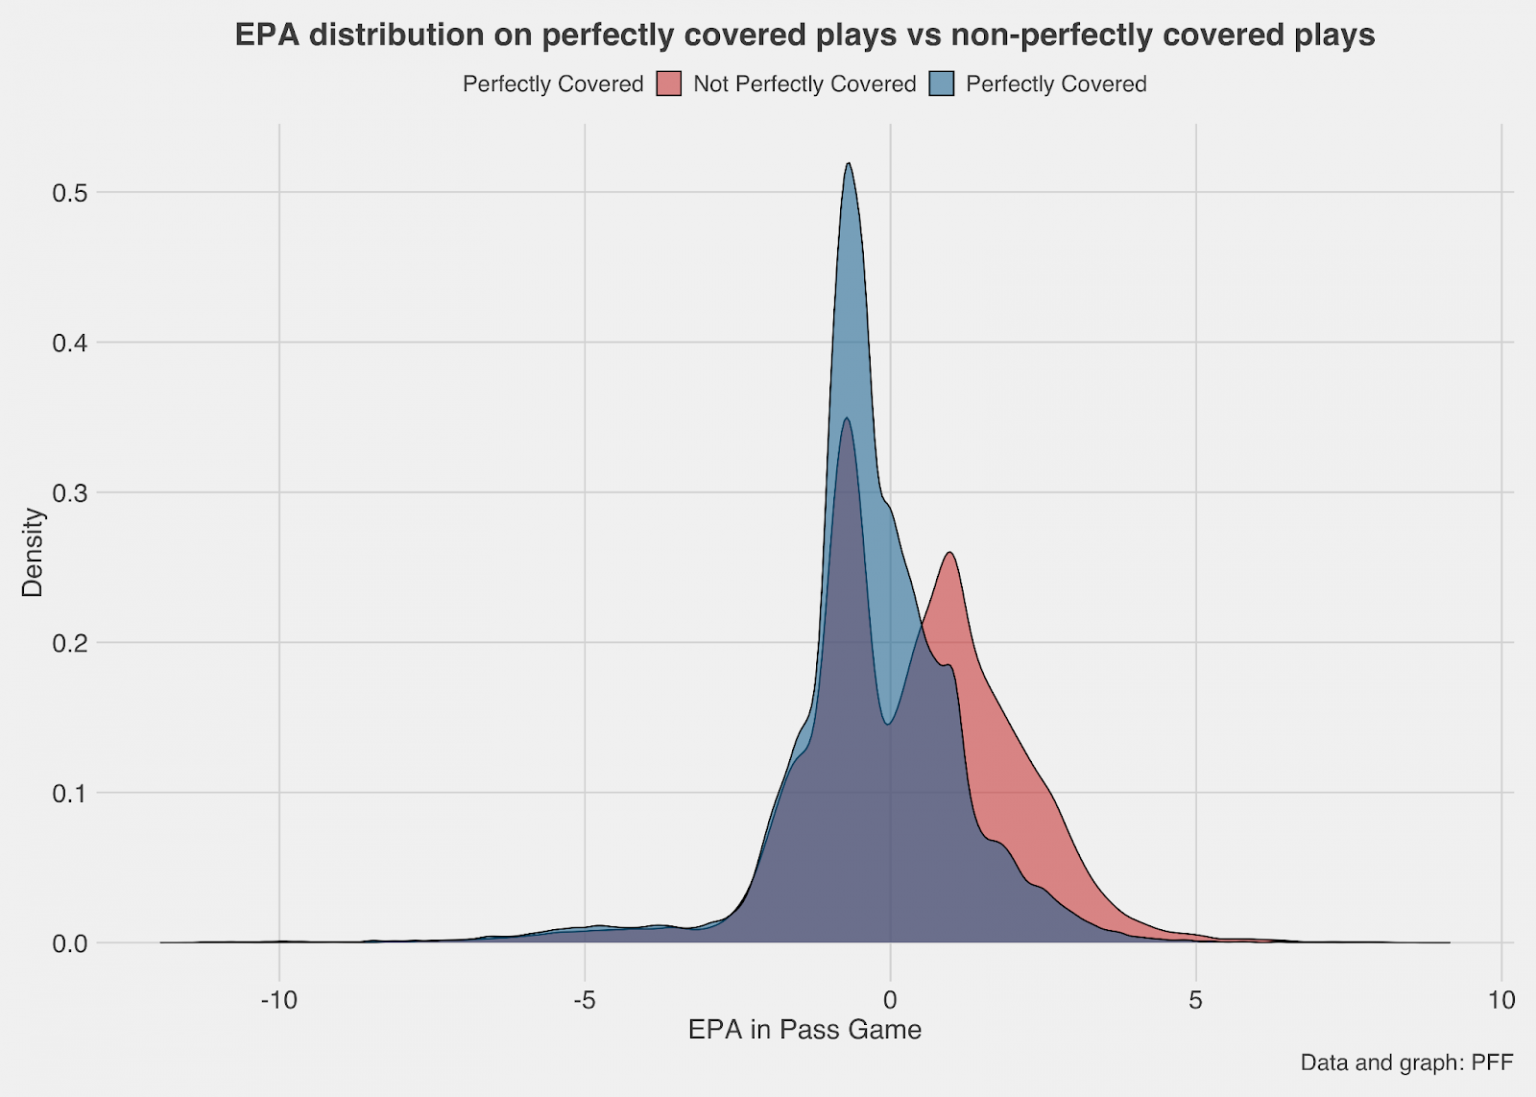 Chart showing EPA Distribution on Perfectly Covered Plays vs. Non-perfectly Covered Plays